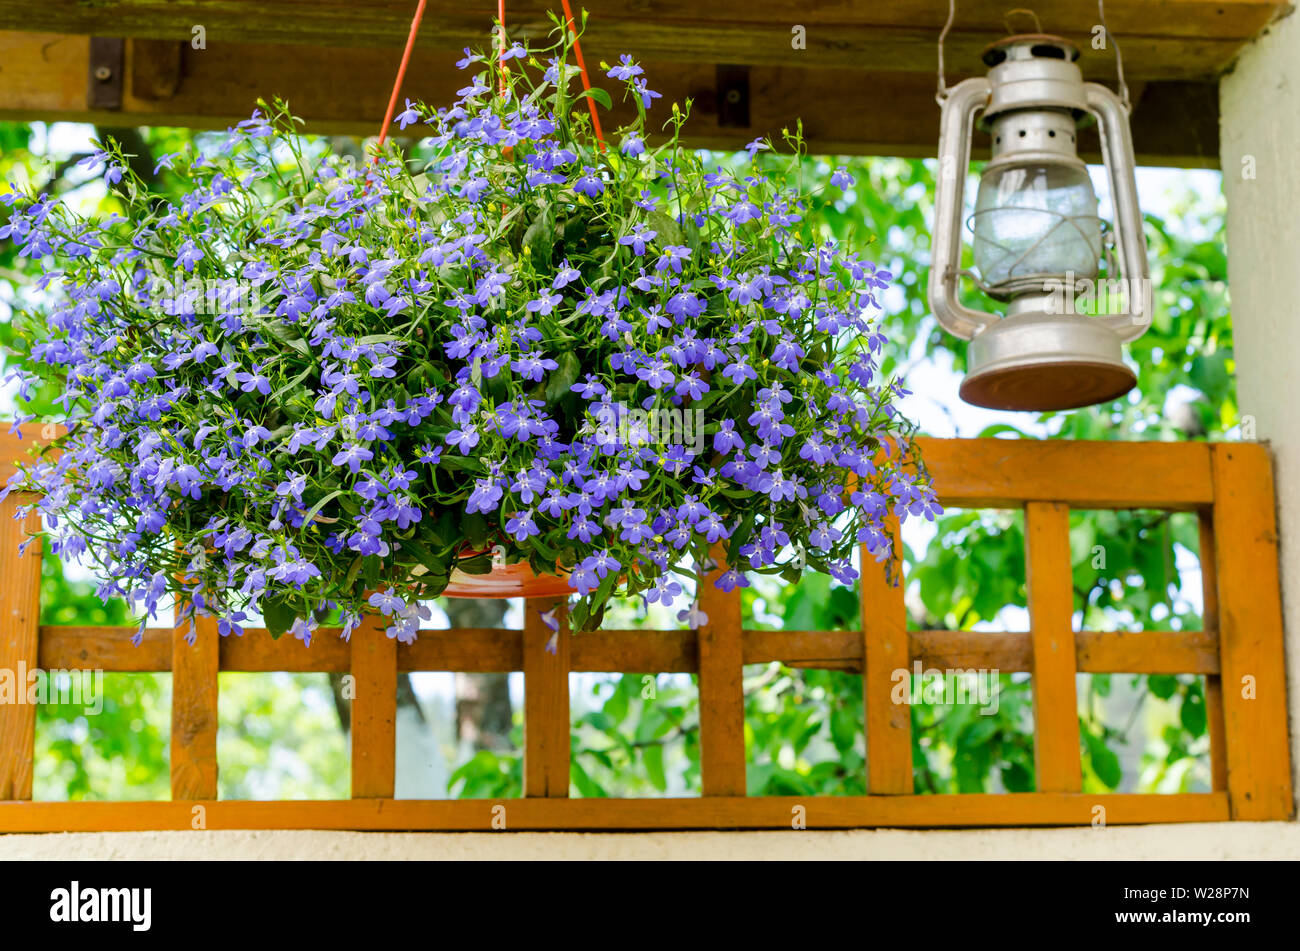 Blue lobelia in hanging pots. Studio Photo Stock Photo